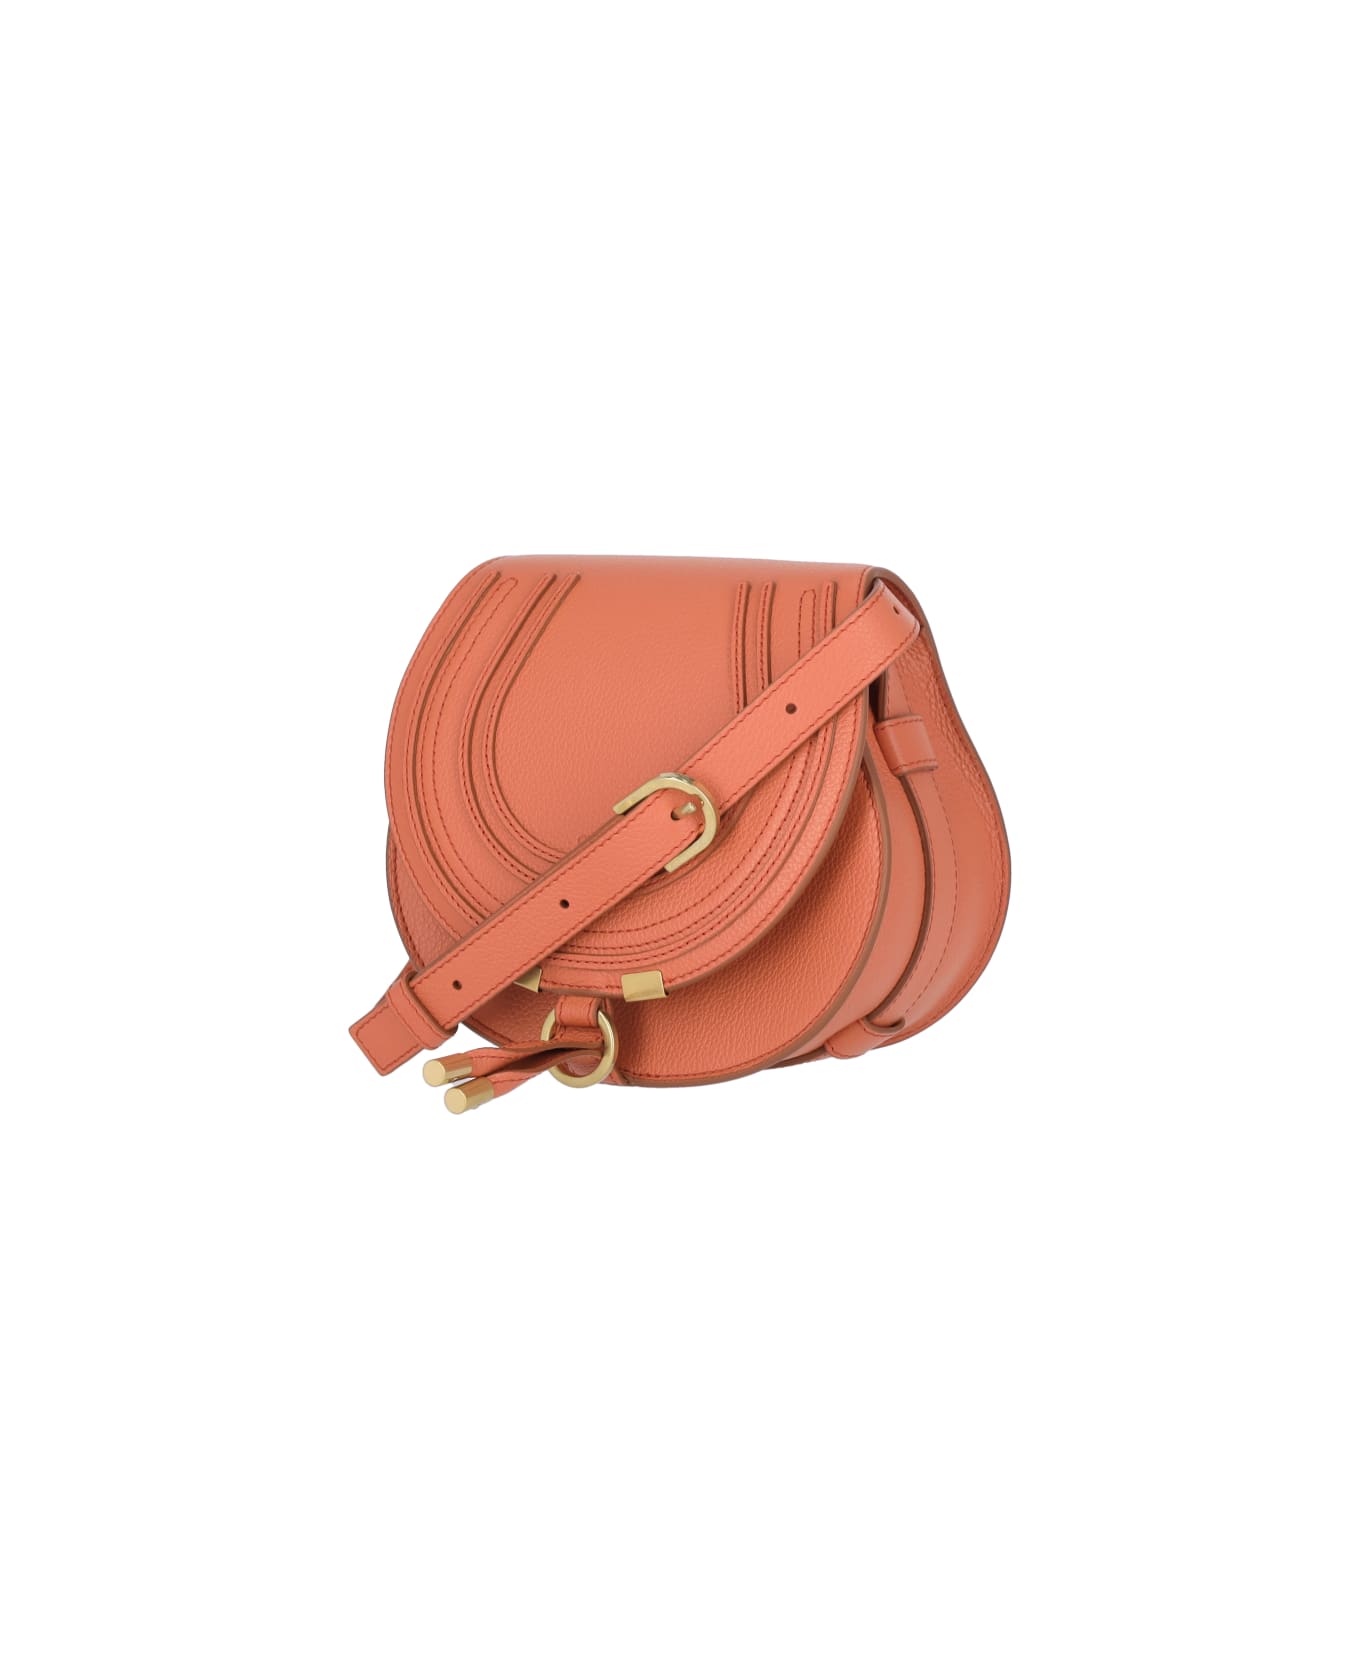 Chloé Mercie Shoulder Bag In Orange Leather - Orange